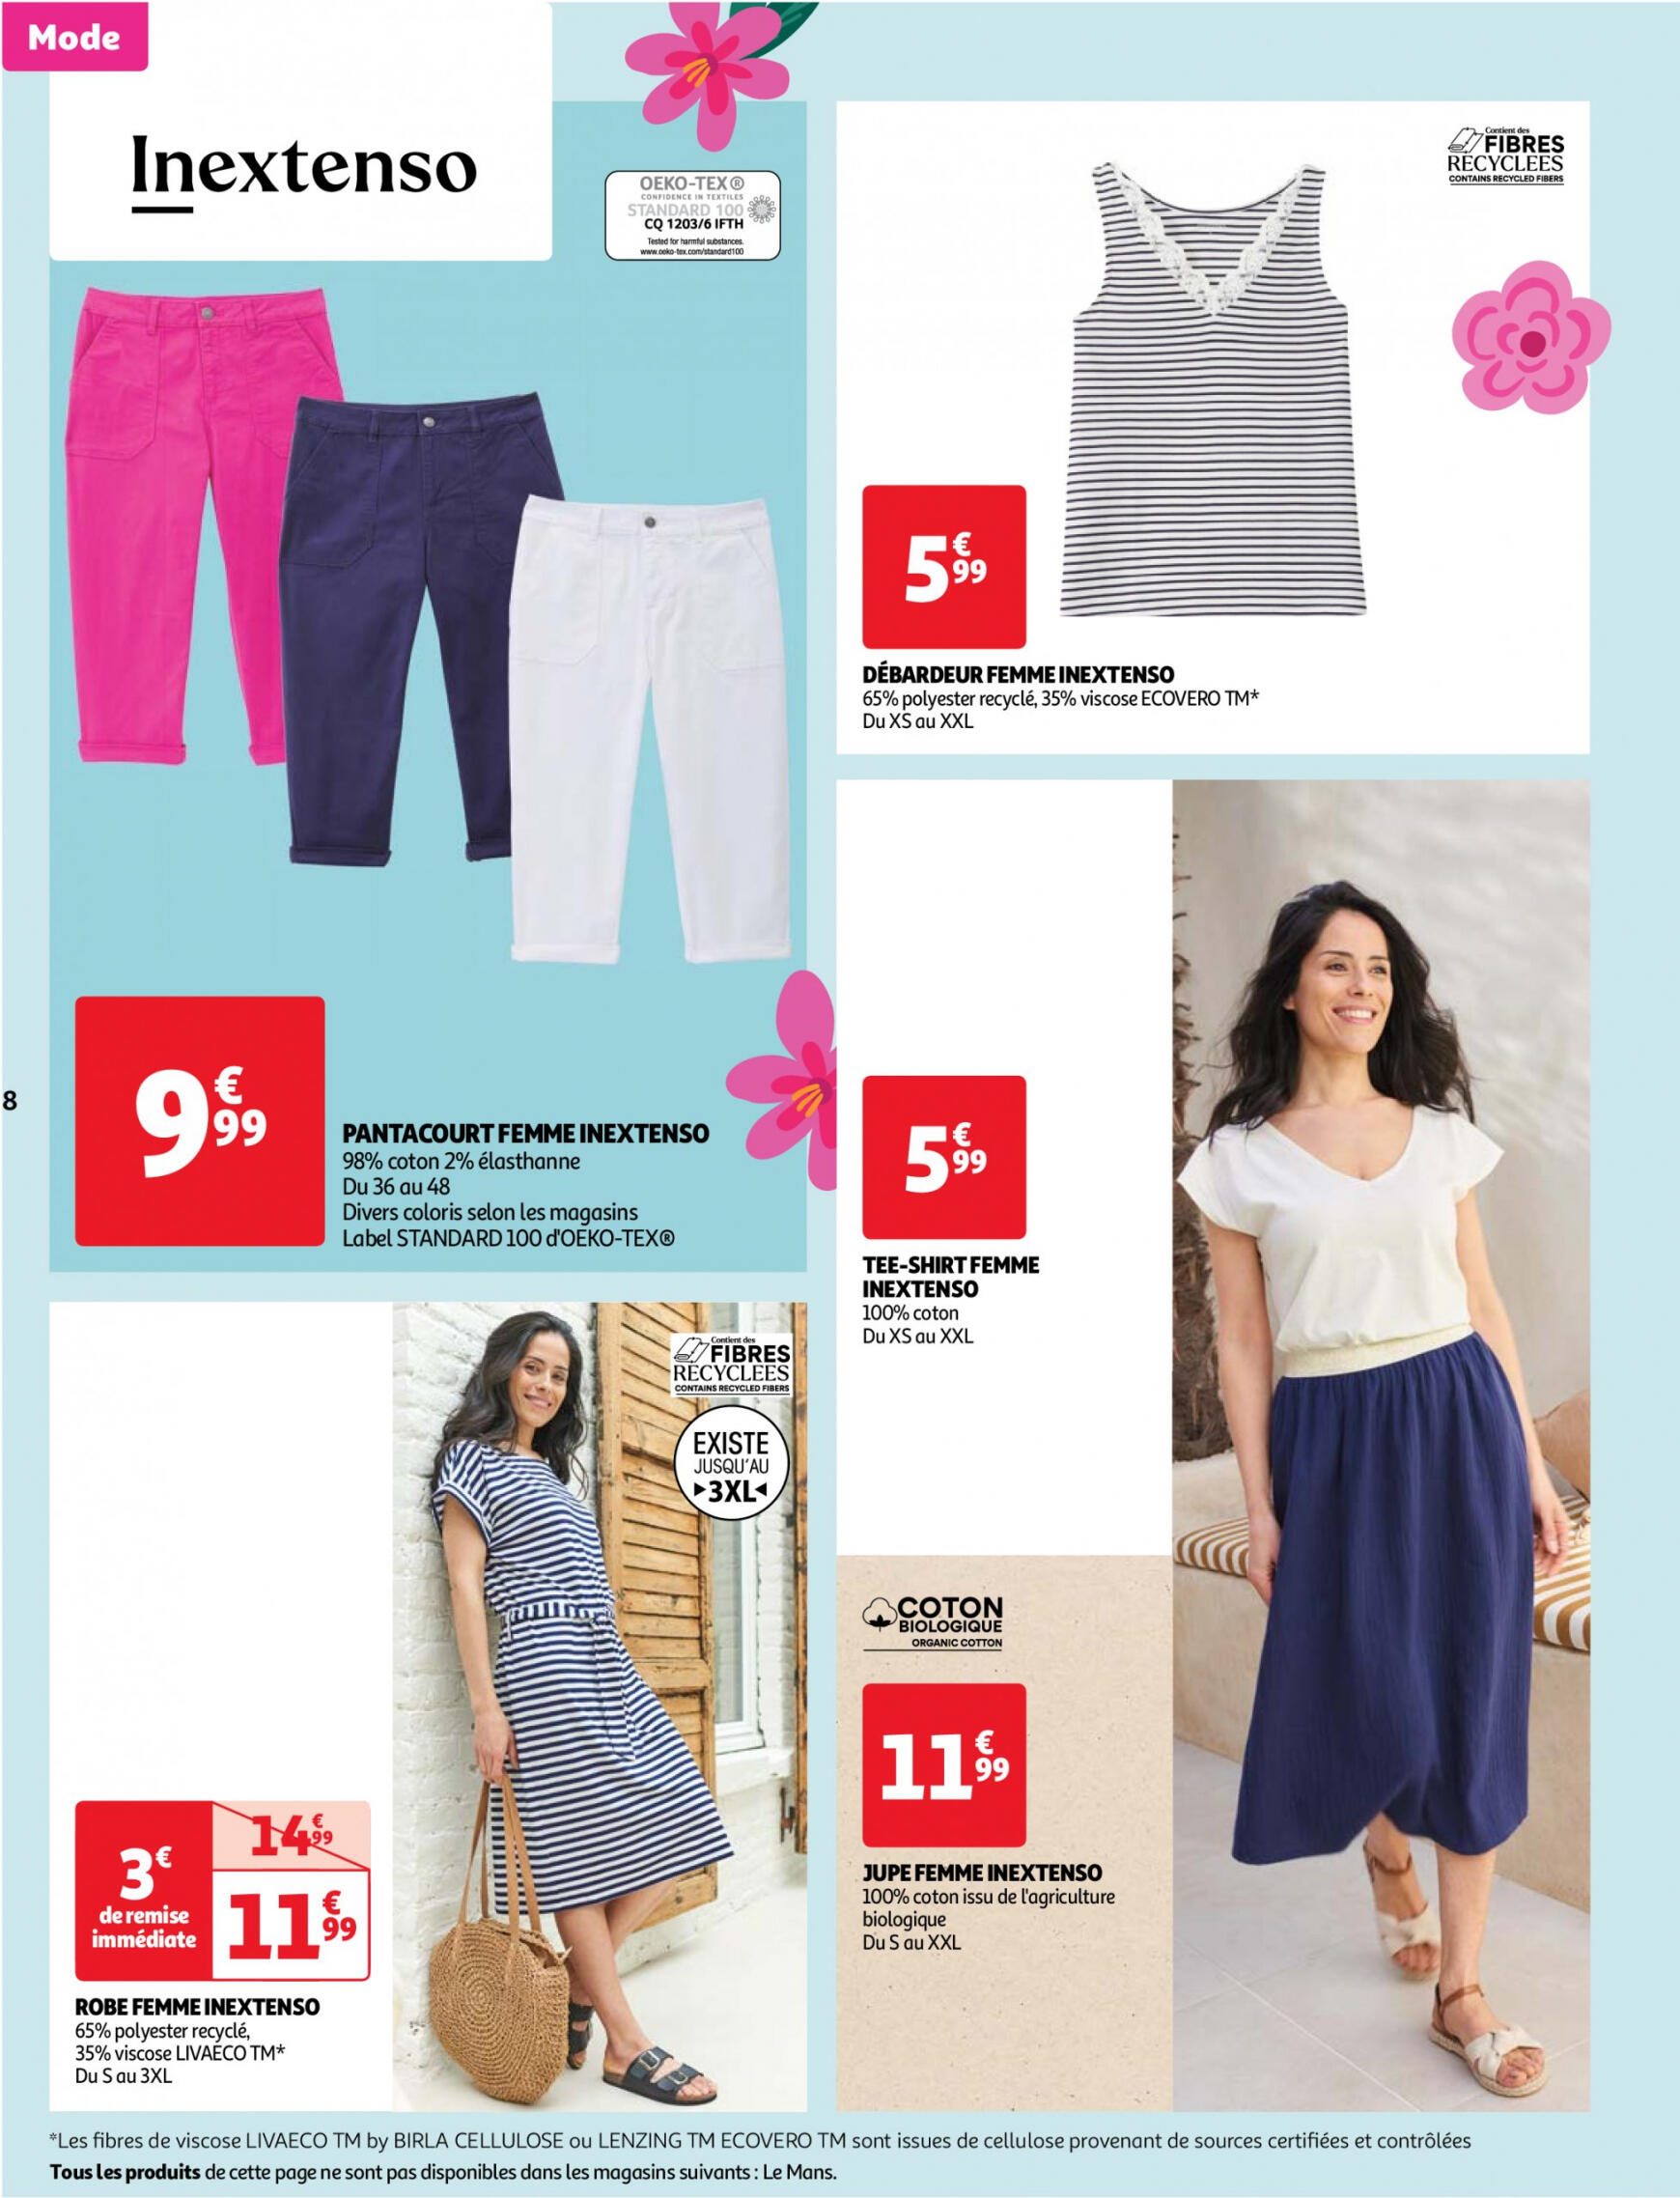 auchan - Prospectus Auchan - Merci maman actuel 14.05. - 26.05. - page: 8